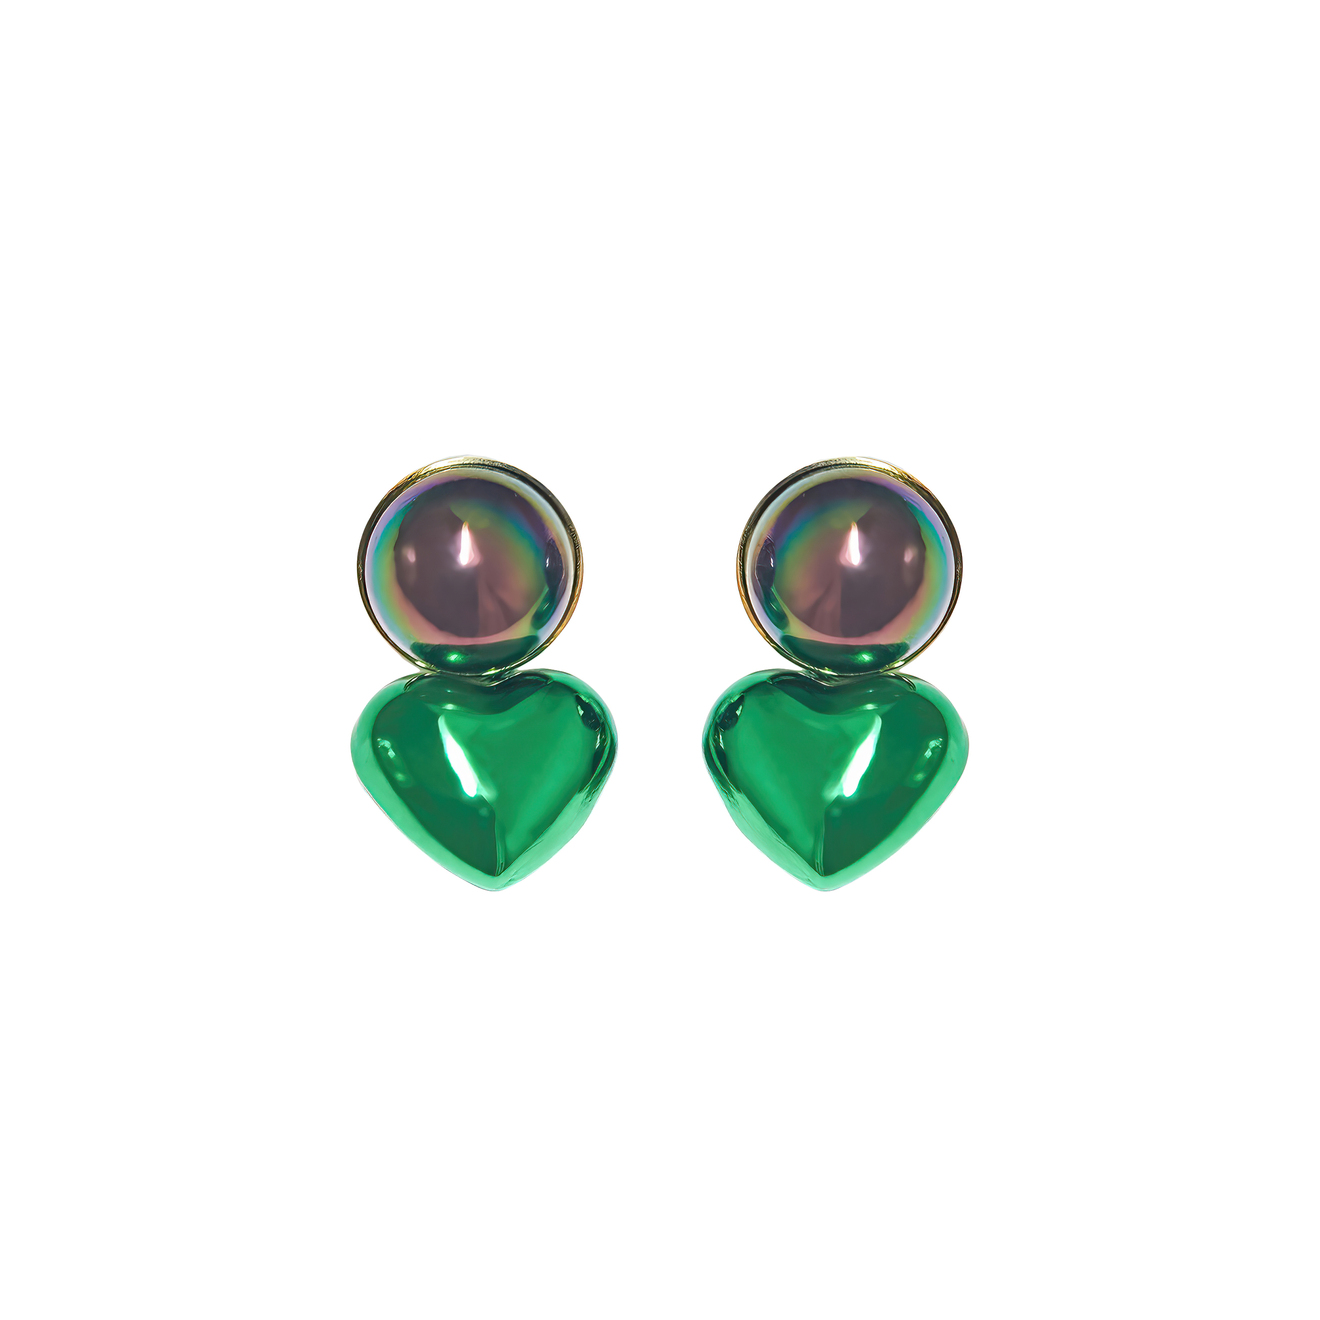 Free Form Jewelry Зеленые серьги-сердца с шариком наушники creative outlier free зеленые